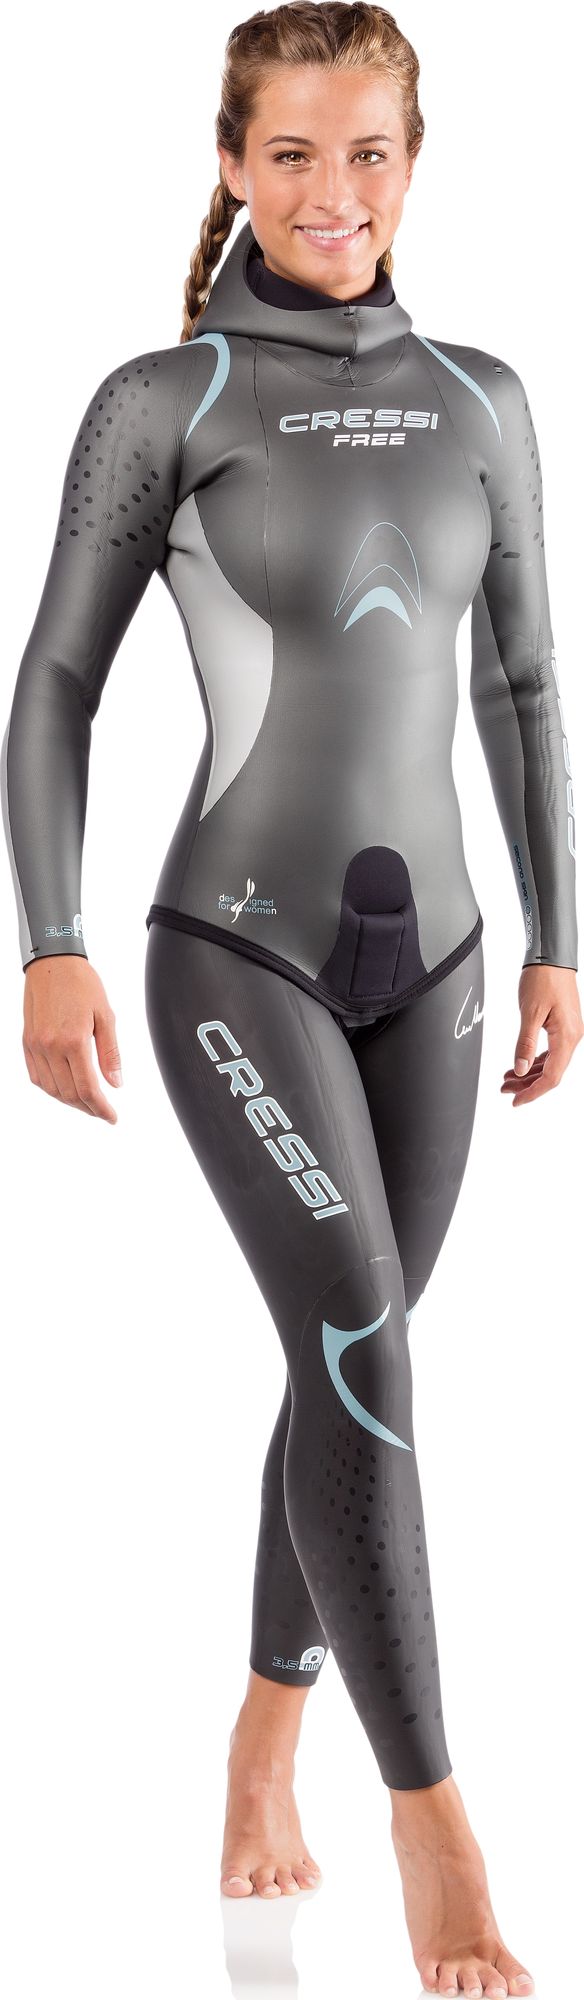 Introducing: Cressi Apnea [The New Freediving Wetsuit] 